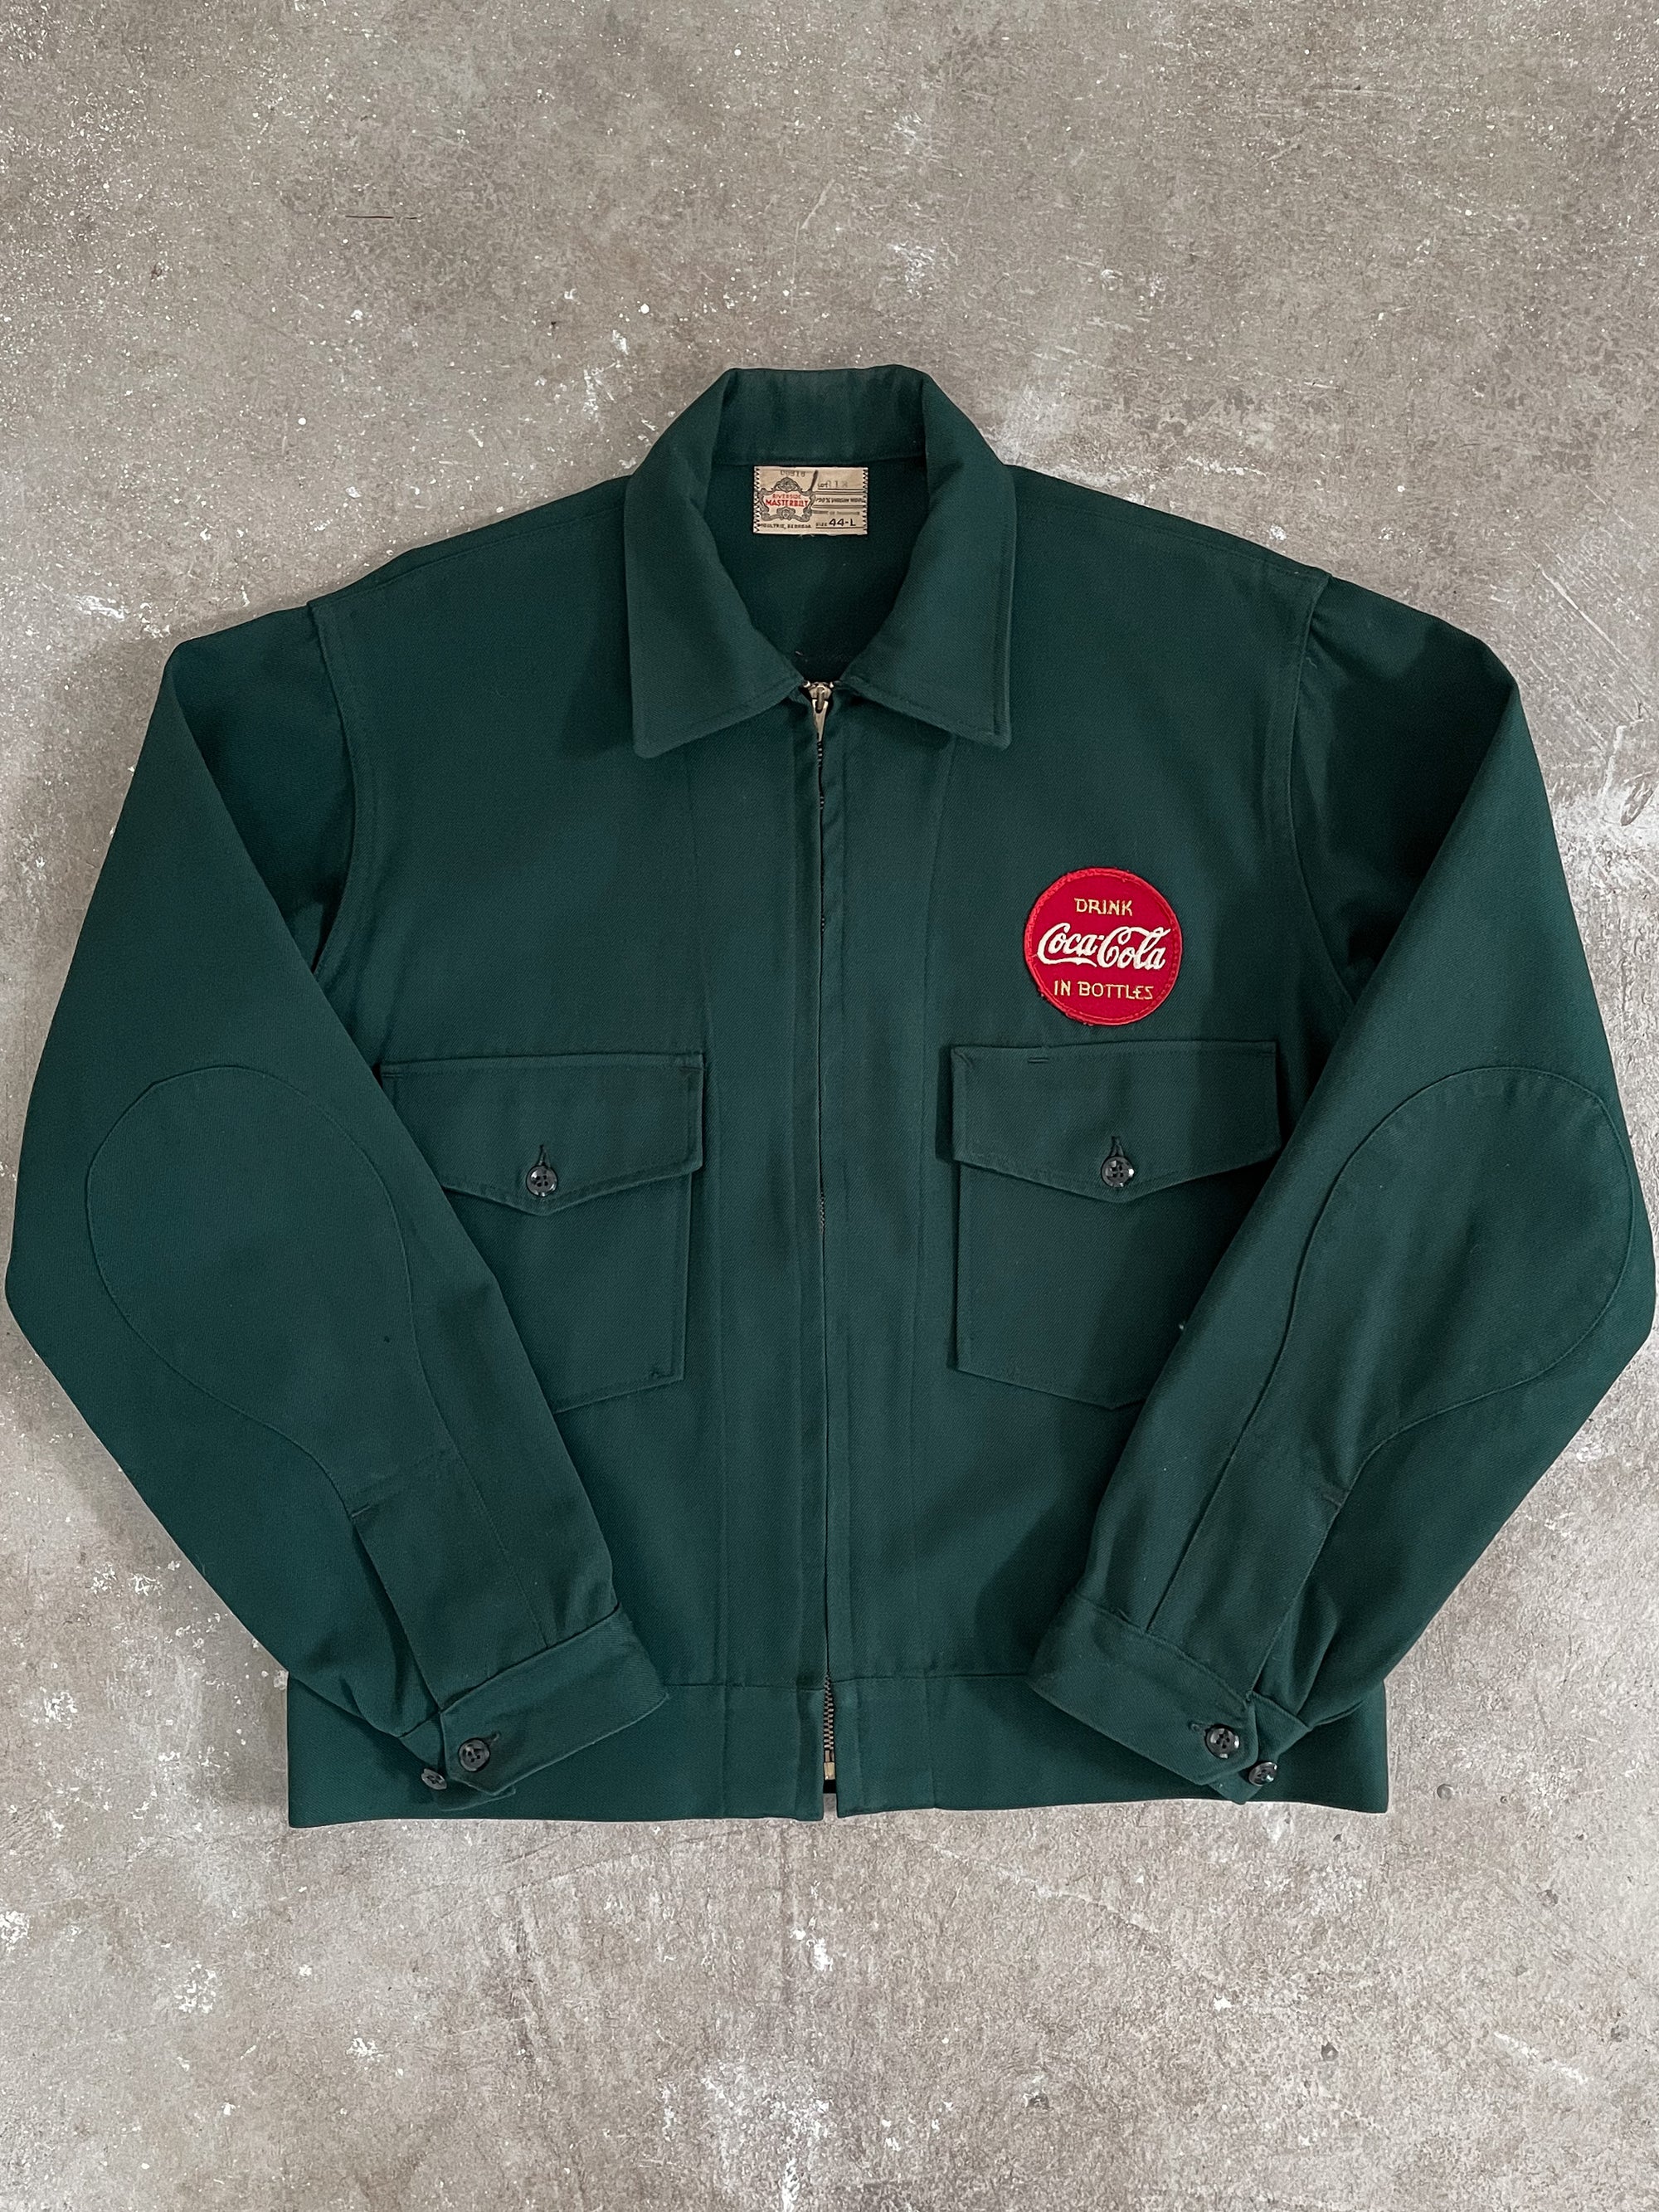 1950s “Coca Cola” Green Wool Talon Zip Work Jacket (M)